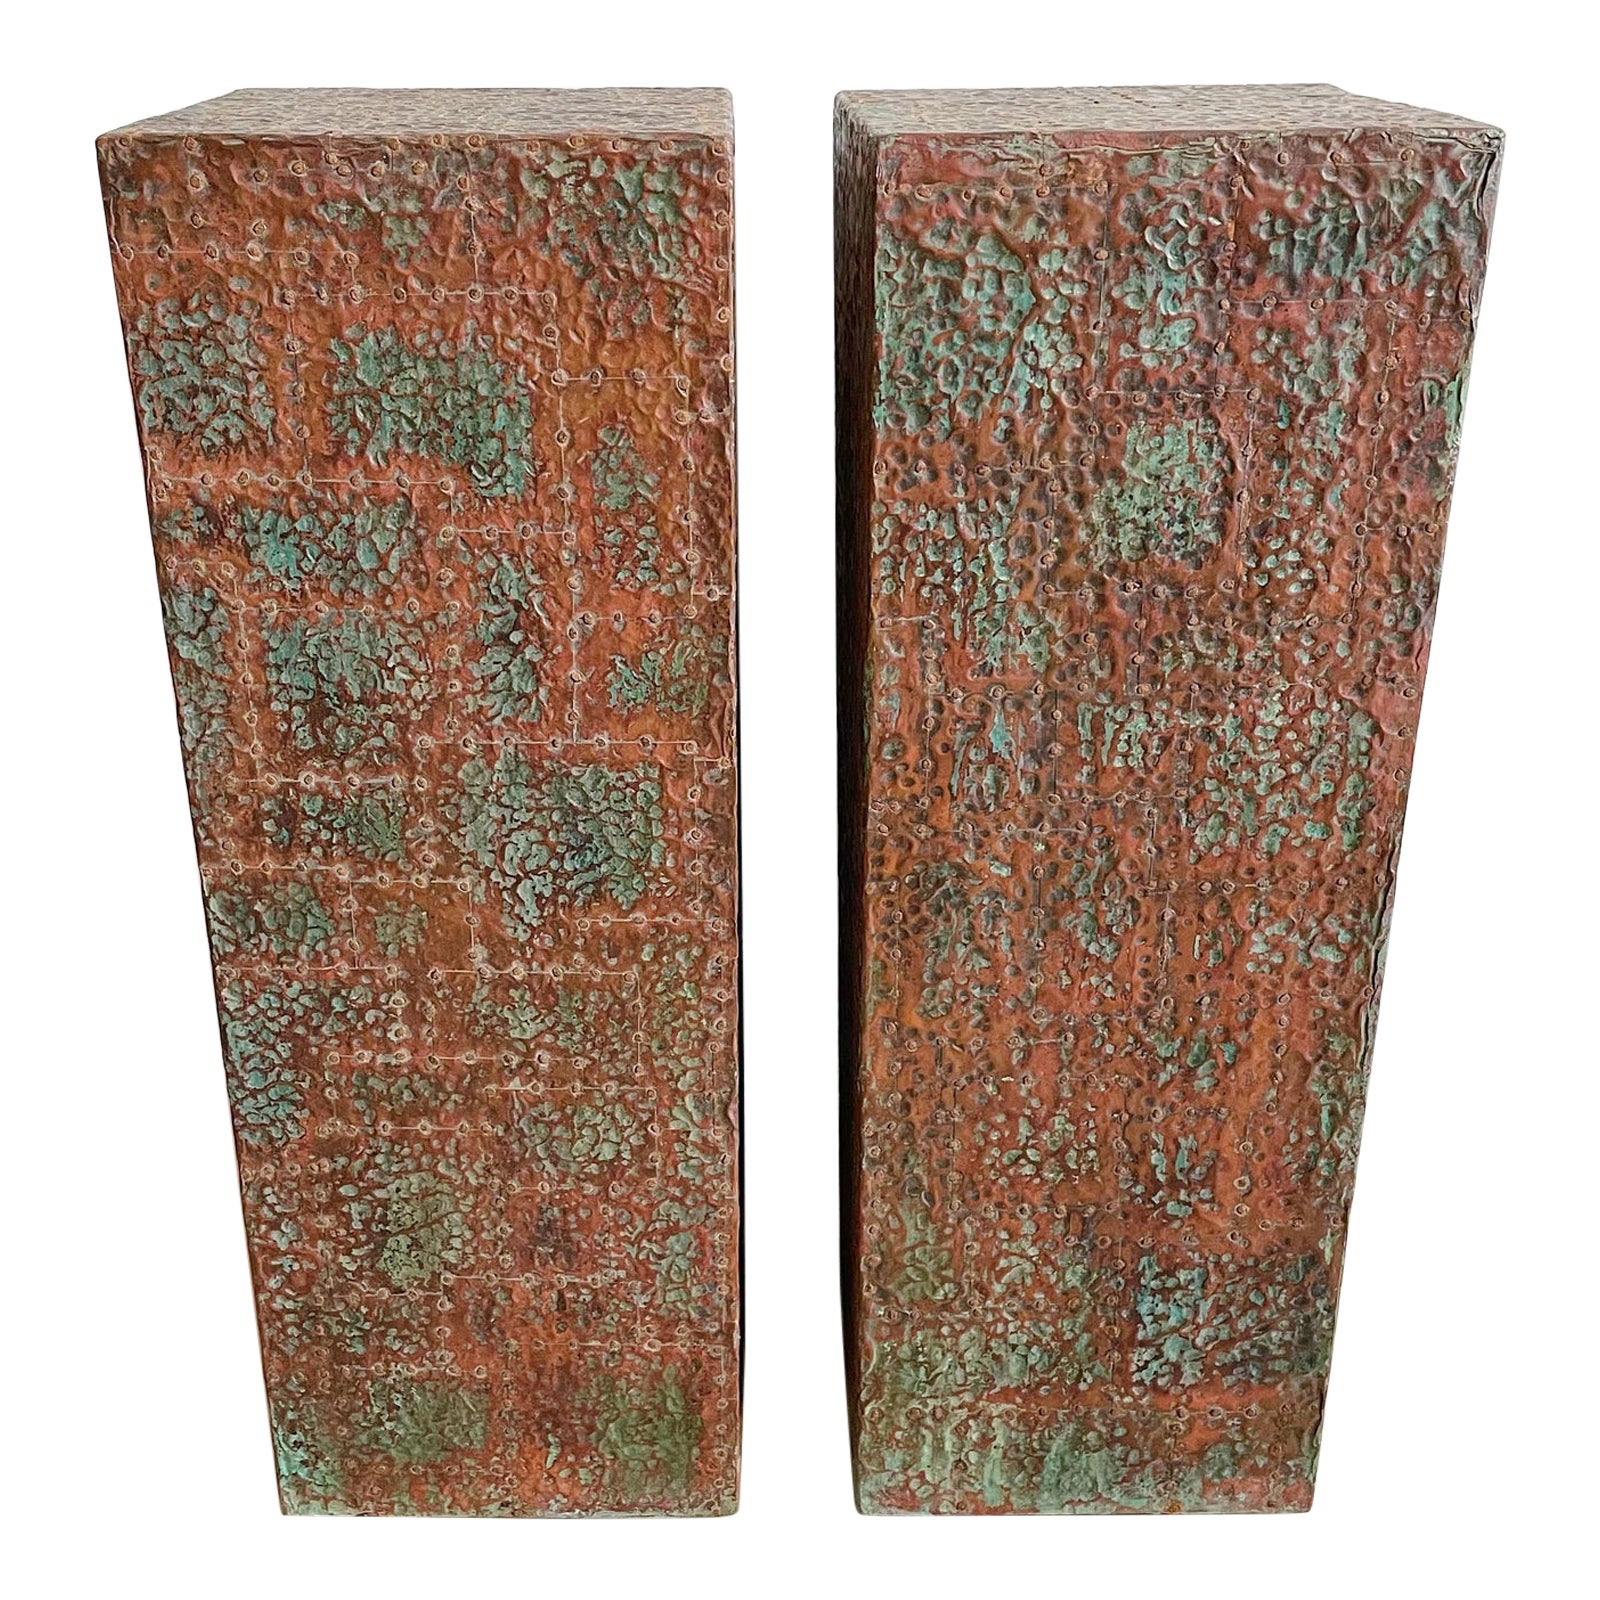 Pair of Bespoke Brutalist Distressed Copper Clad Patchwork Pedestals